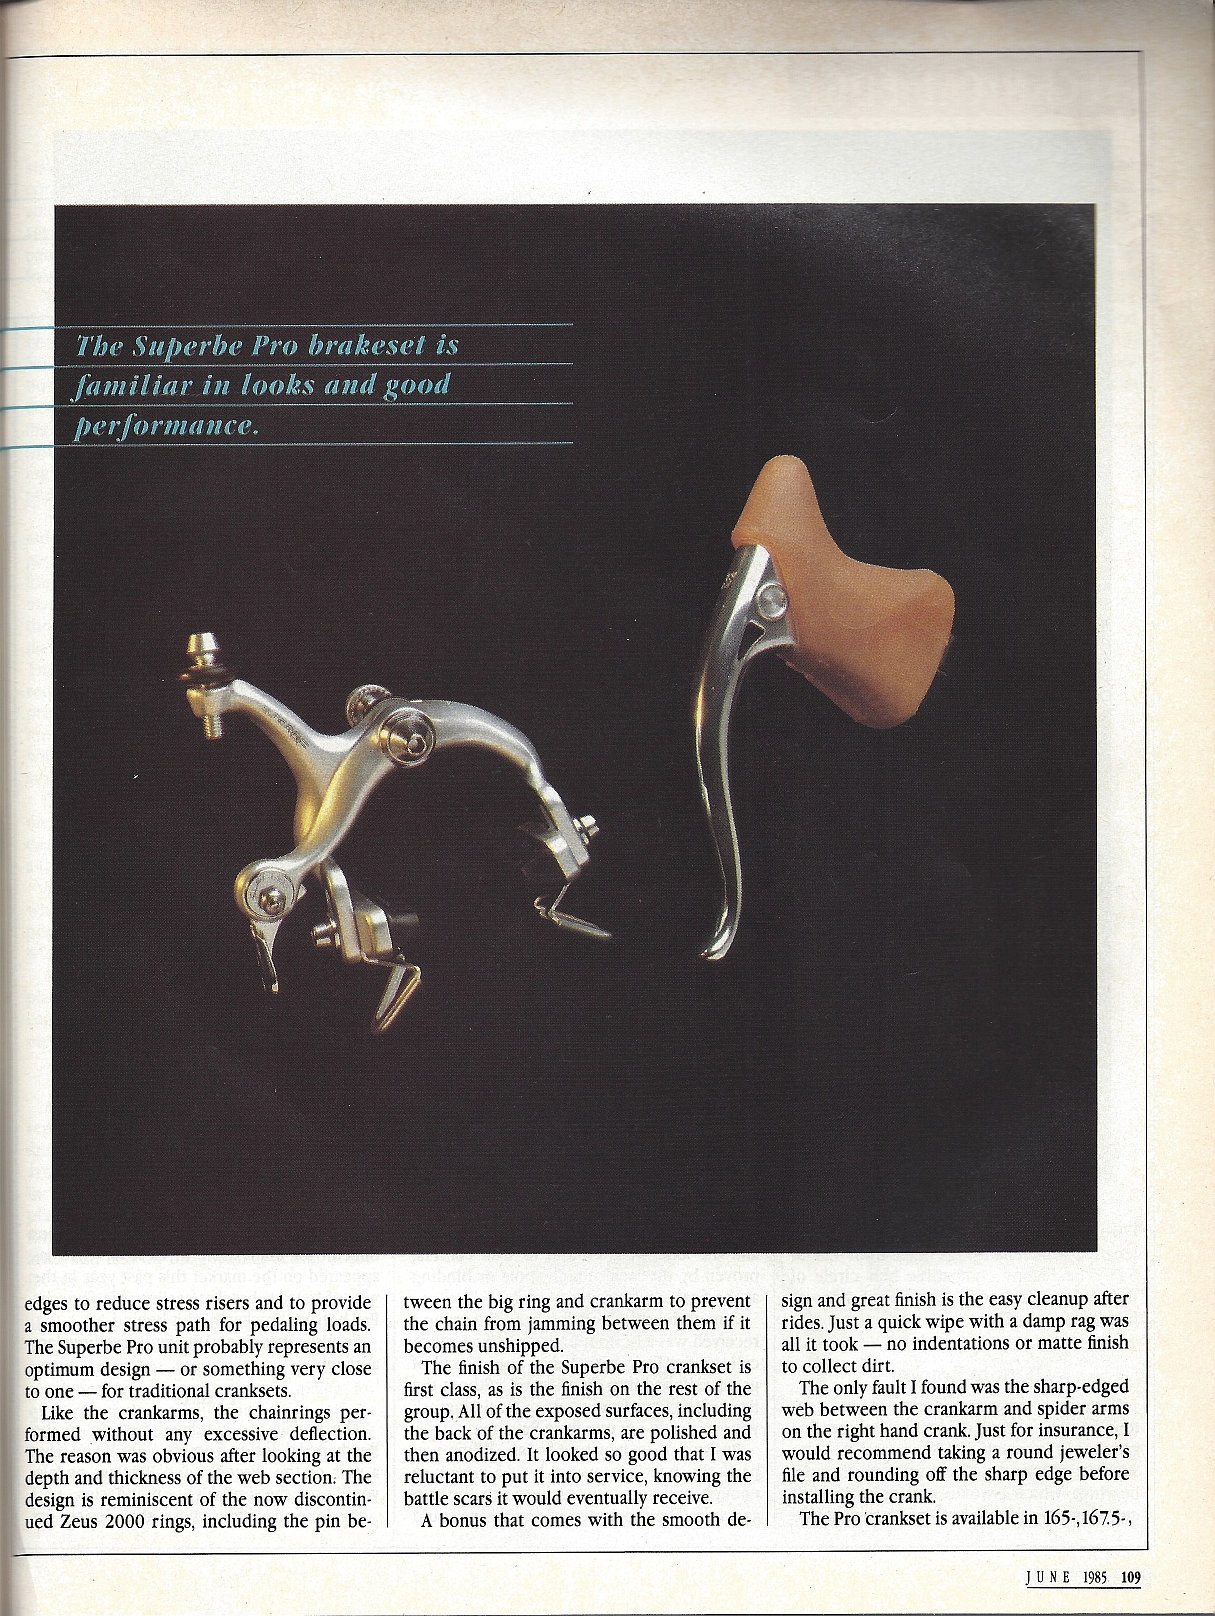 Equipment/Product Review (1985) SUNTOUR Superbe Pro group - Bike